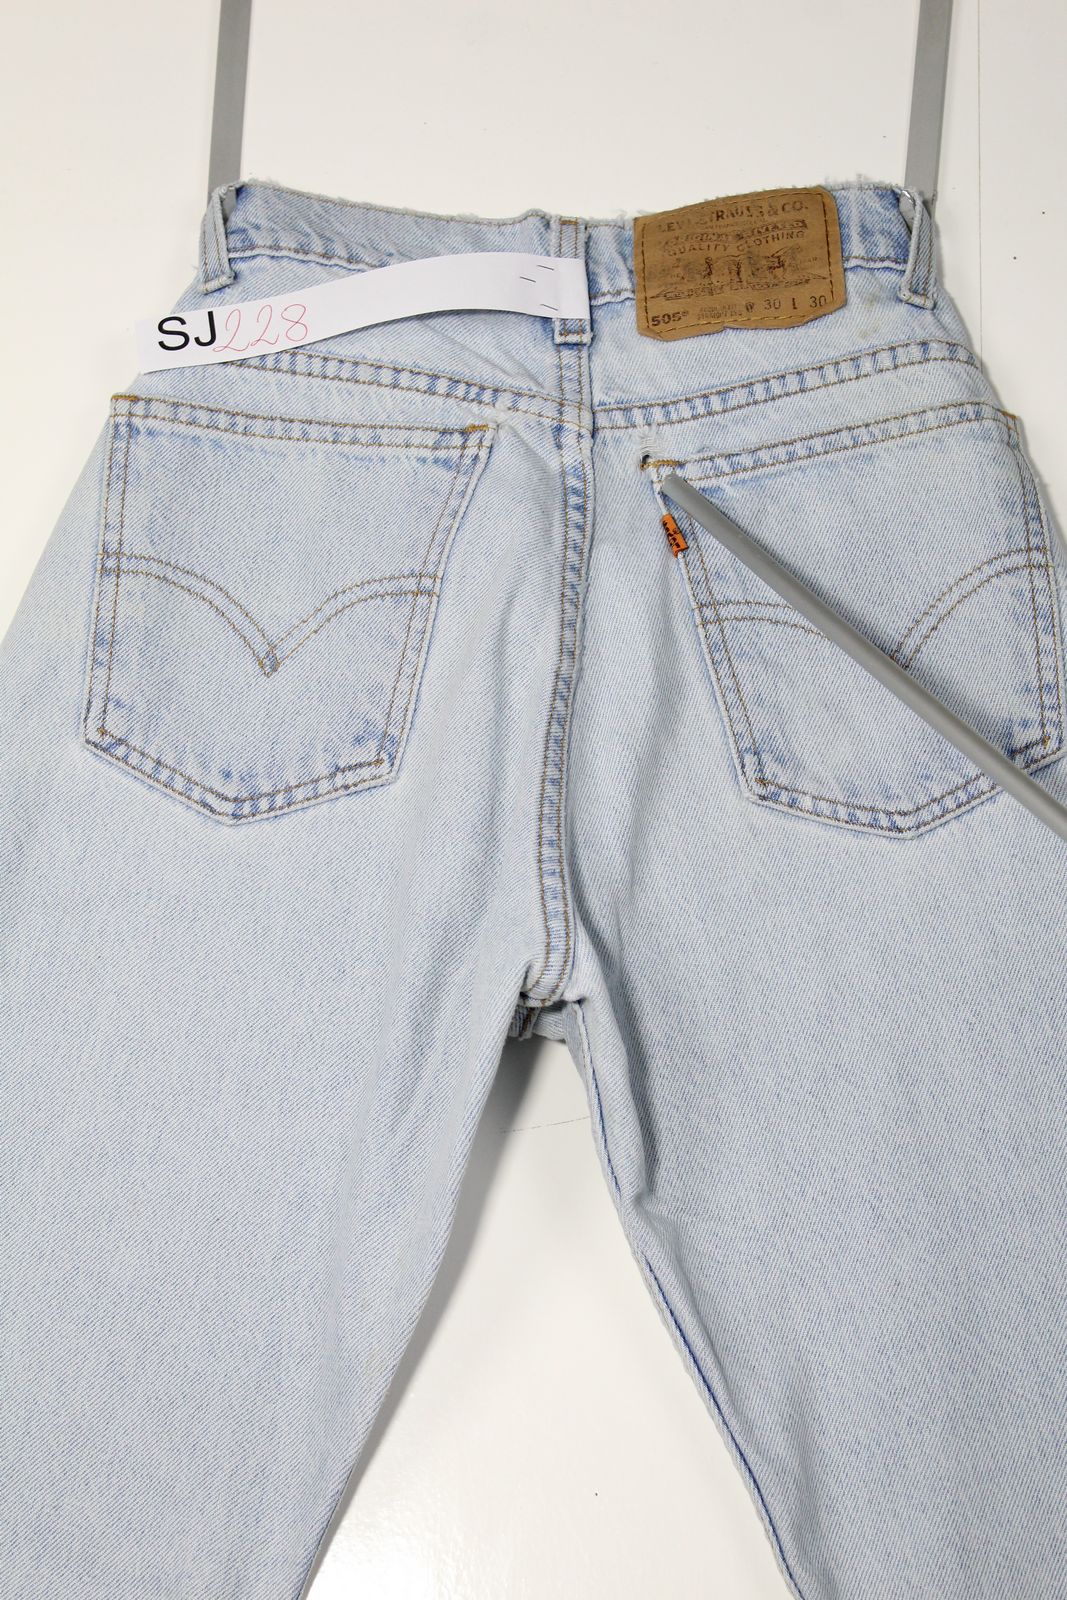 Levi's 505 Orange Tab Denim W30 L30 Made In USA Jeans Vintage